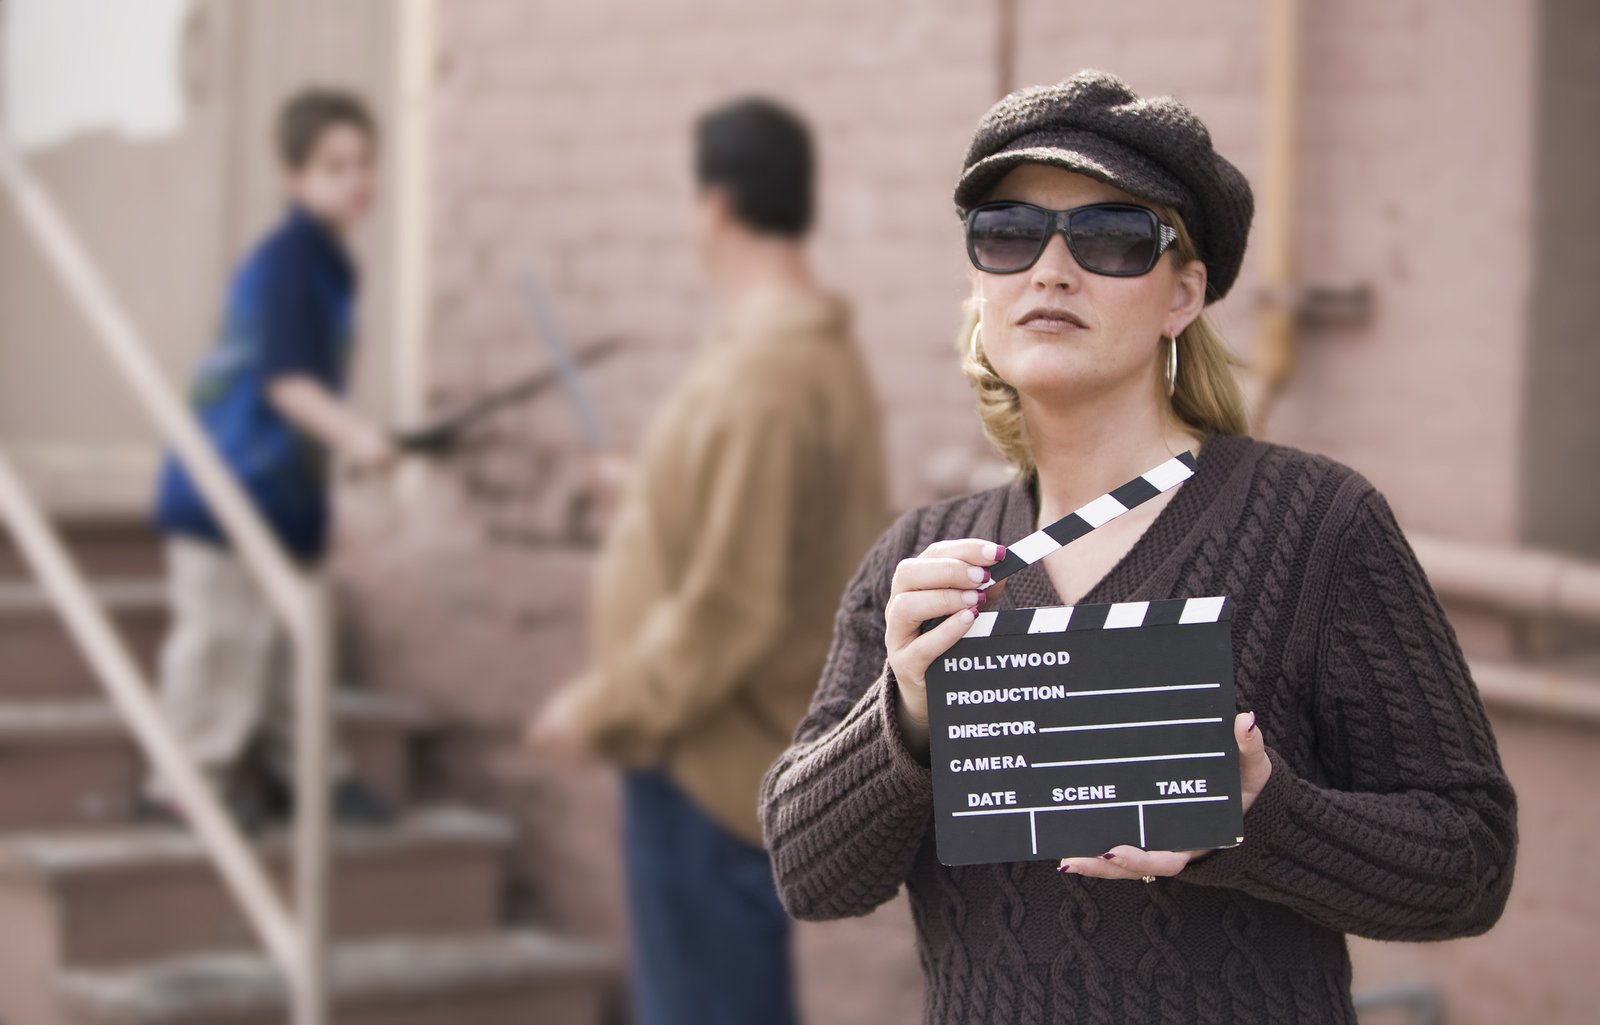 Jenna Ortega & 'Wednesday' Cast Praise “Collaborative” Director Tim Burton